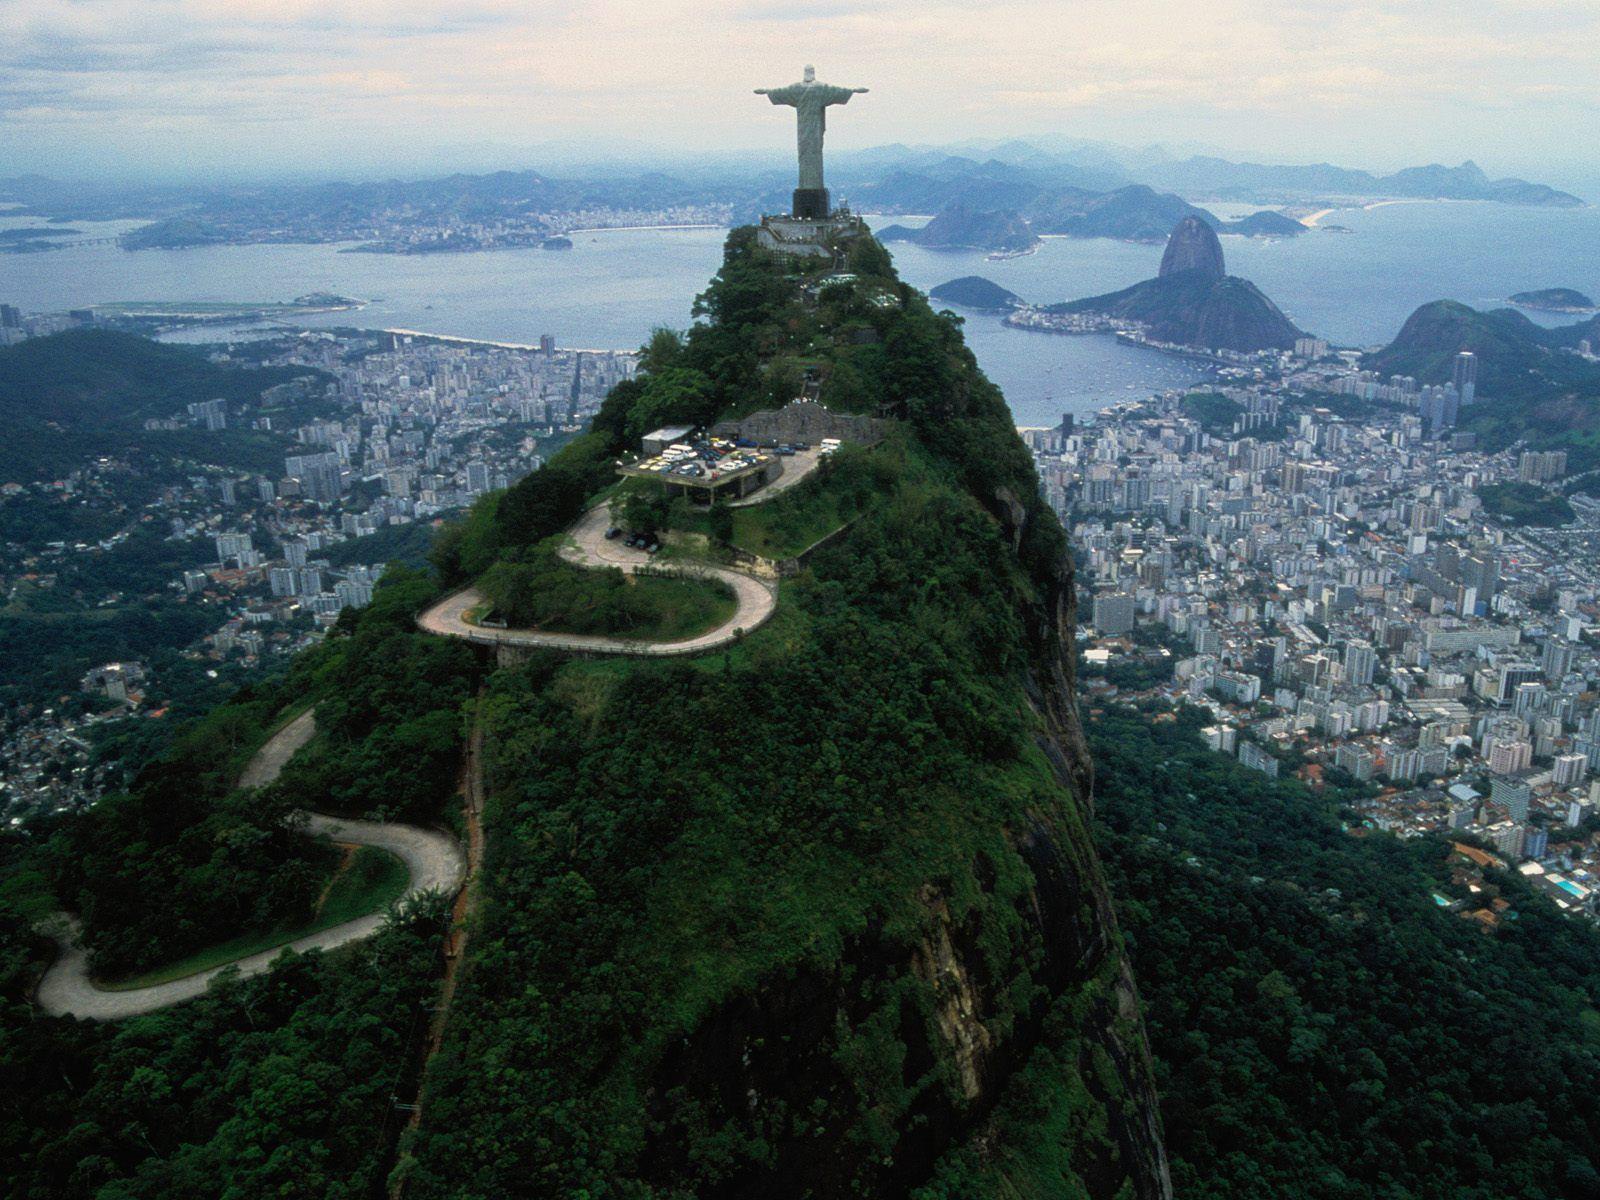 Rio de Janeiro, Brazil, City panorama. Places to